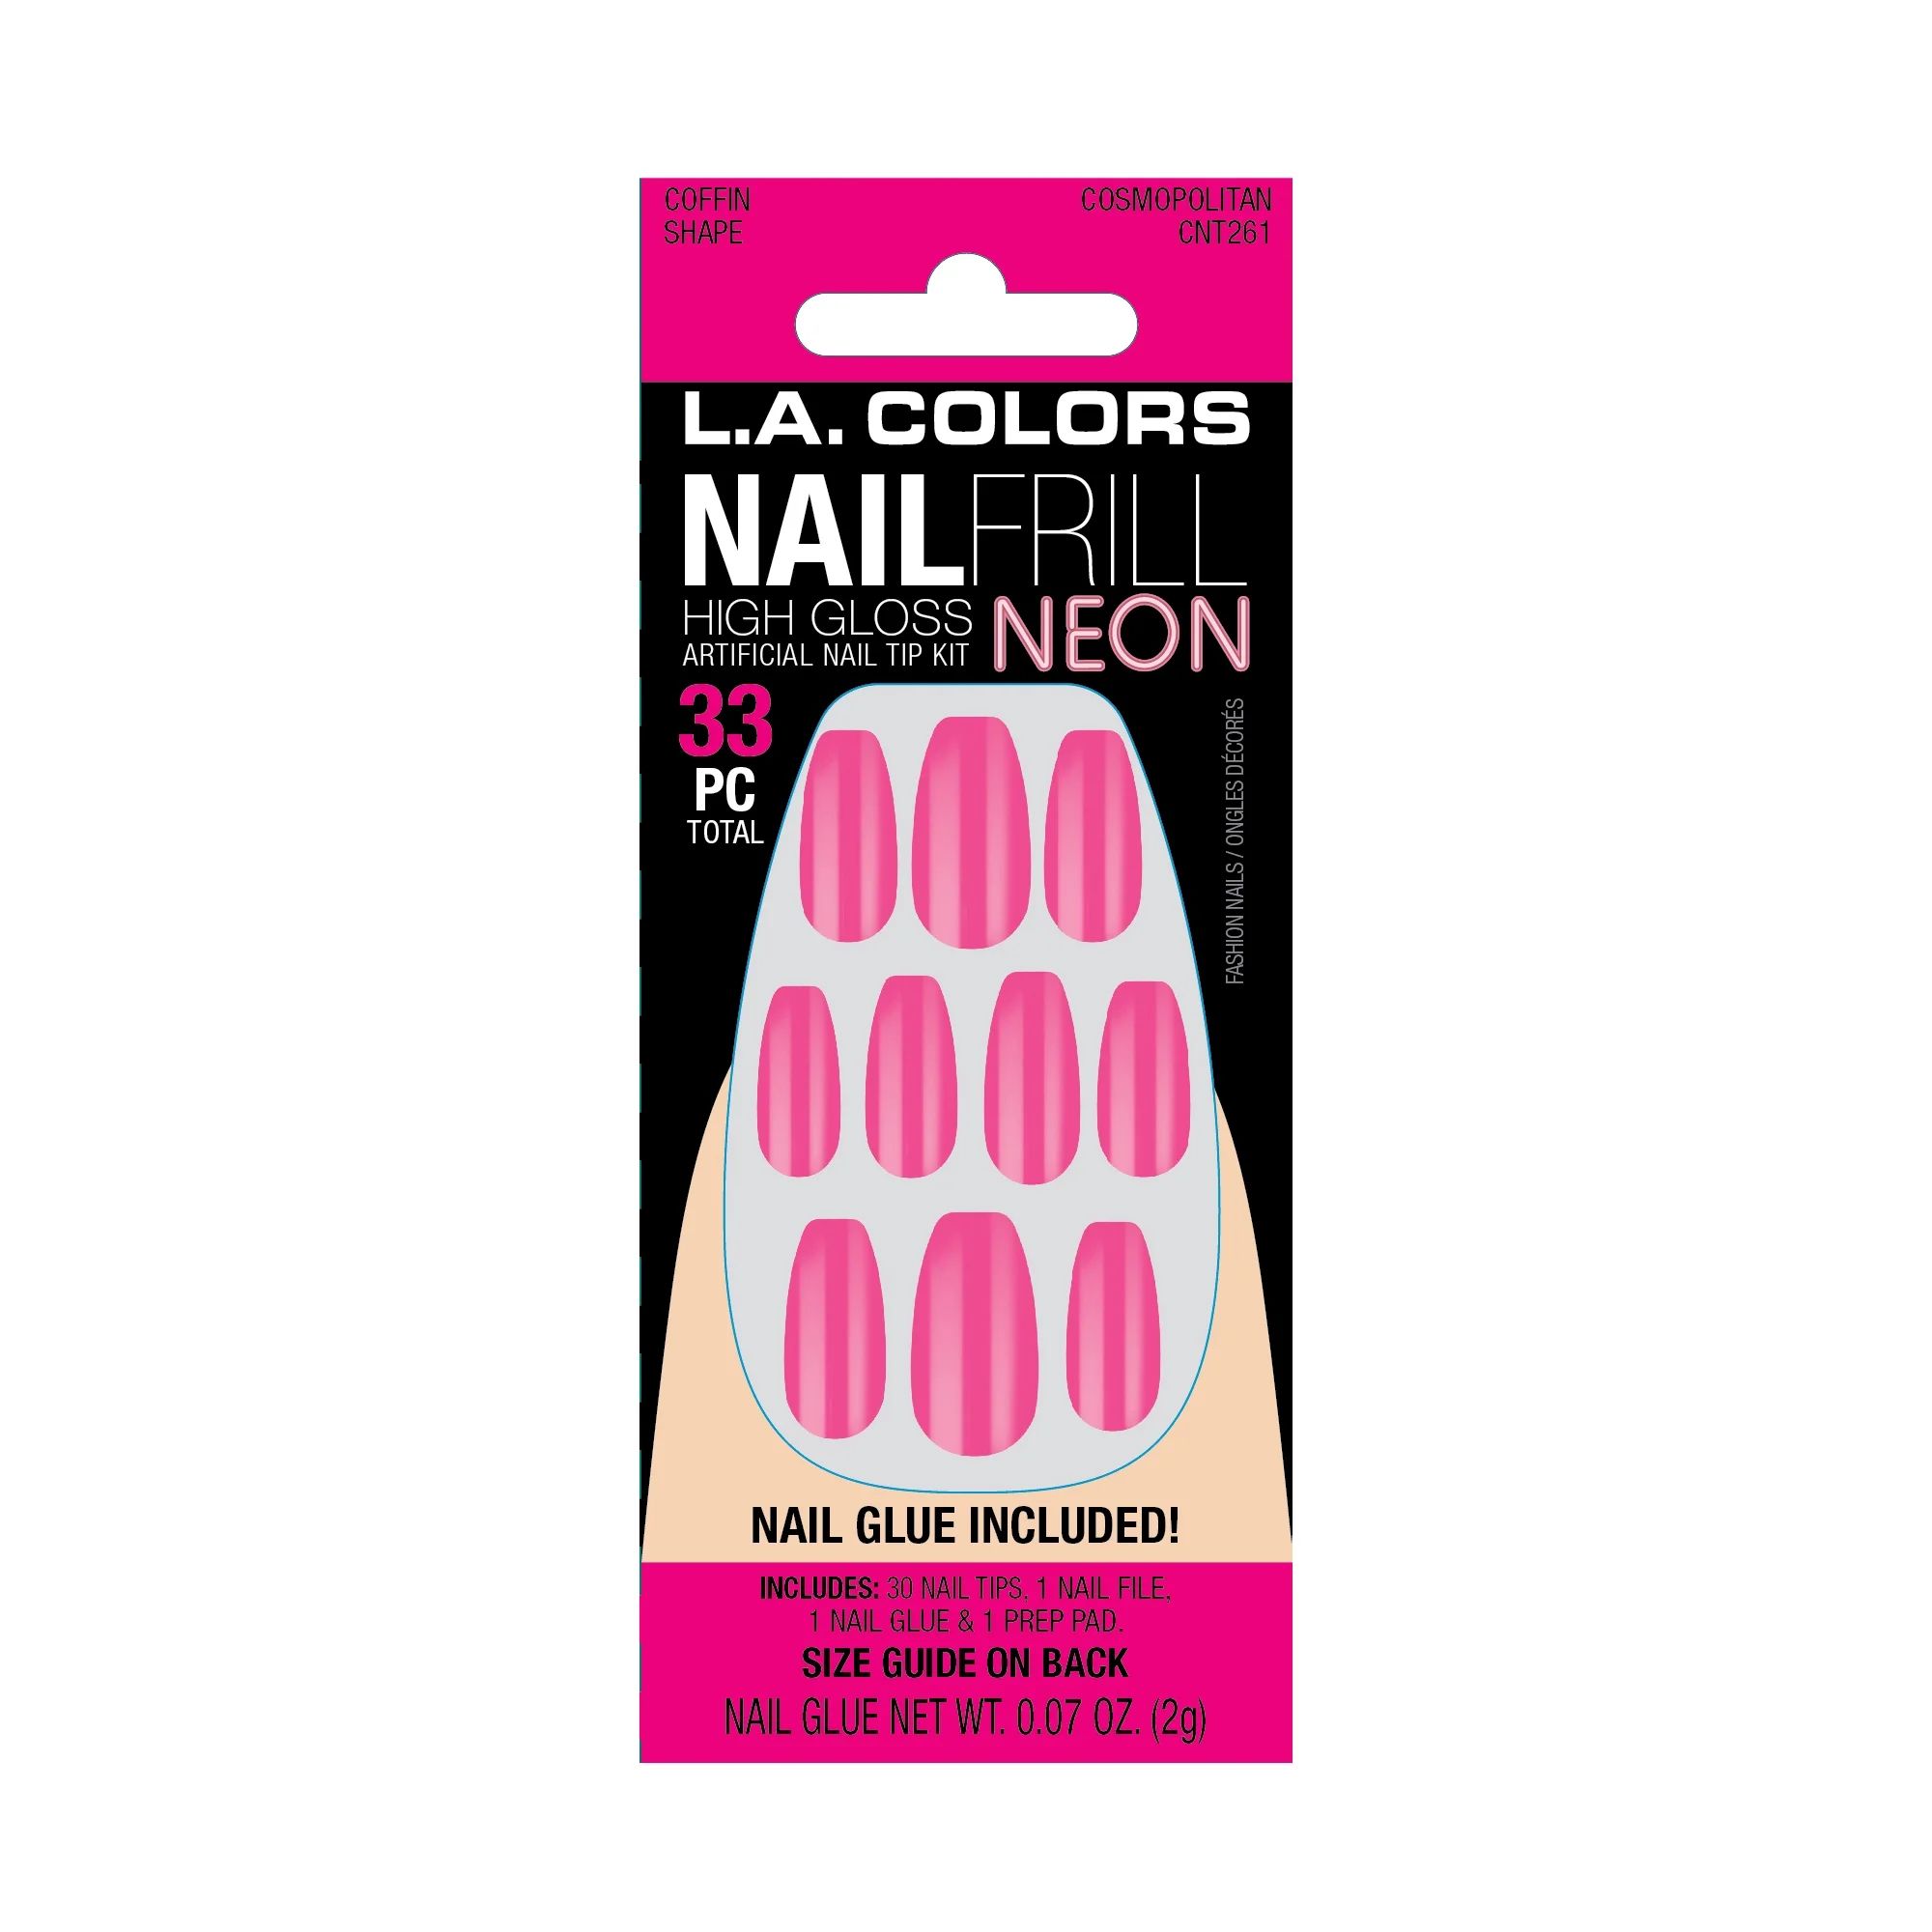 L.A. Colors Nail Frill Cosmopolitan Coffin, 33 Piece | Walmart (US)